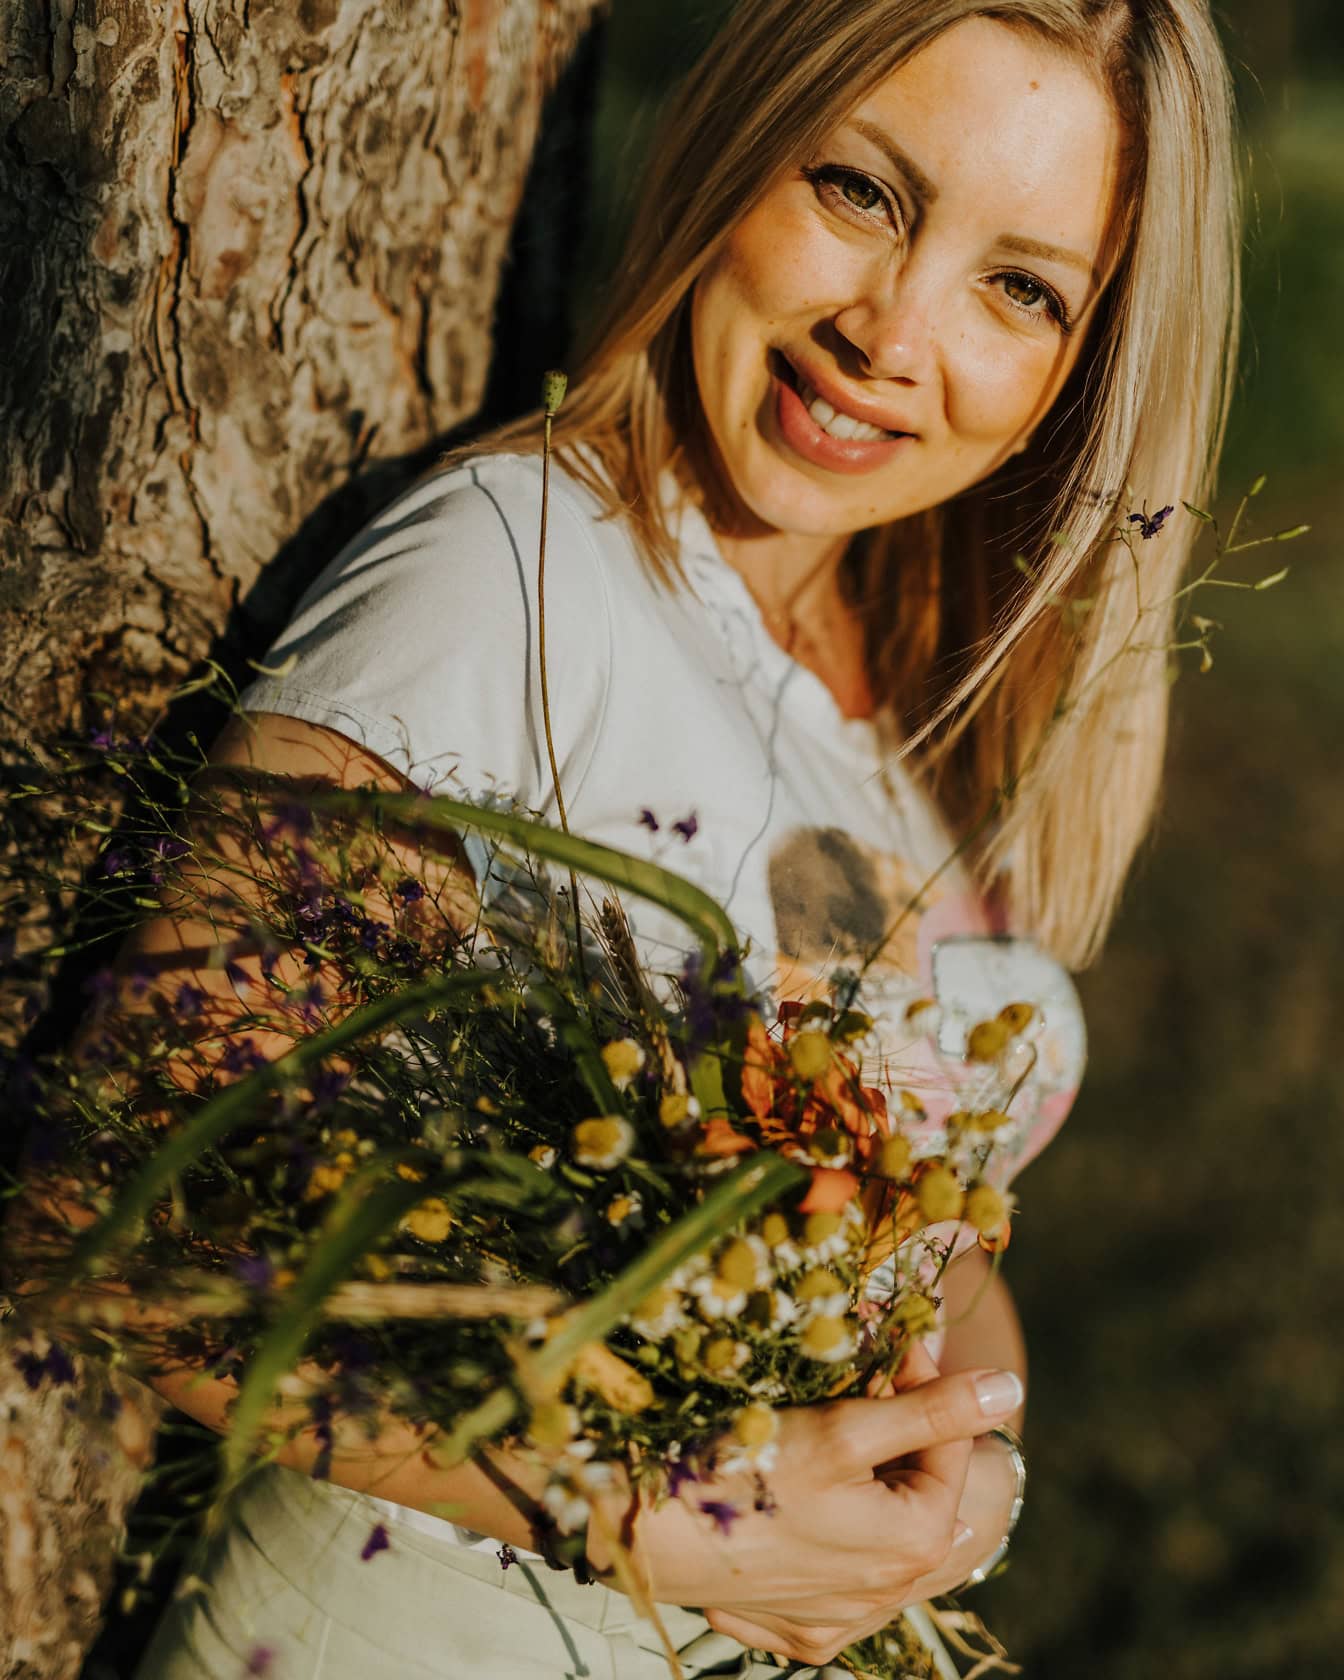 Potret seorang wanita pirang tersenyum bersandar di pohon sambil memegang buket bunga liar